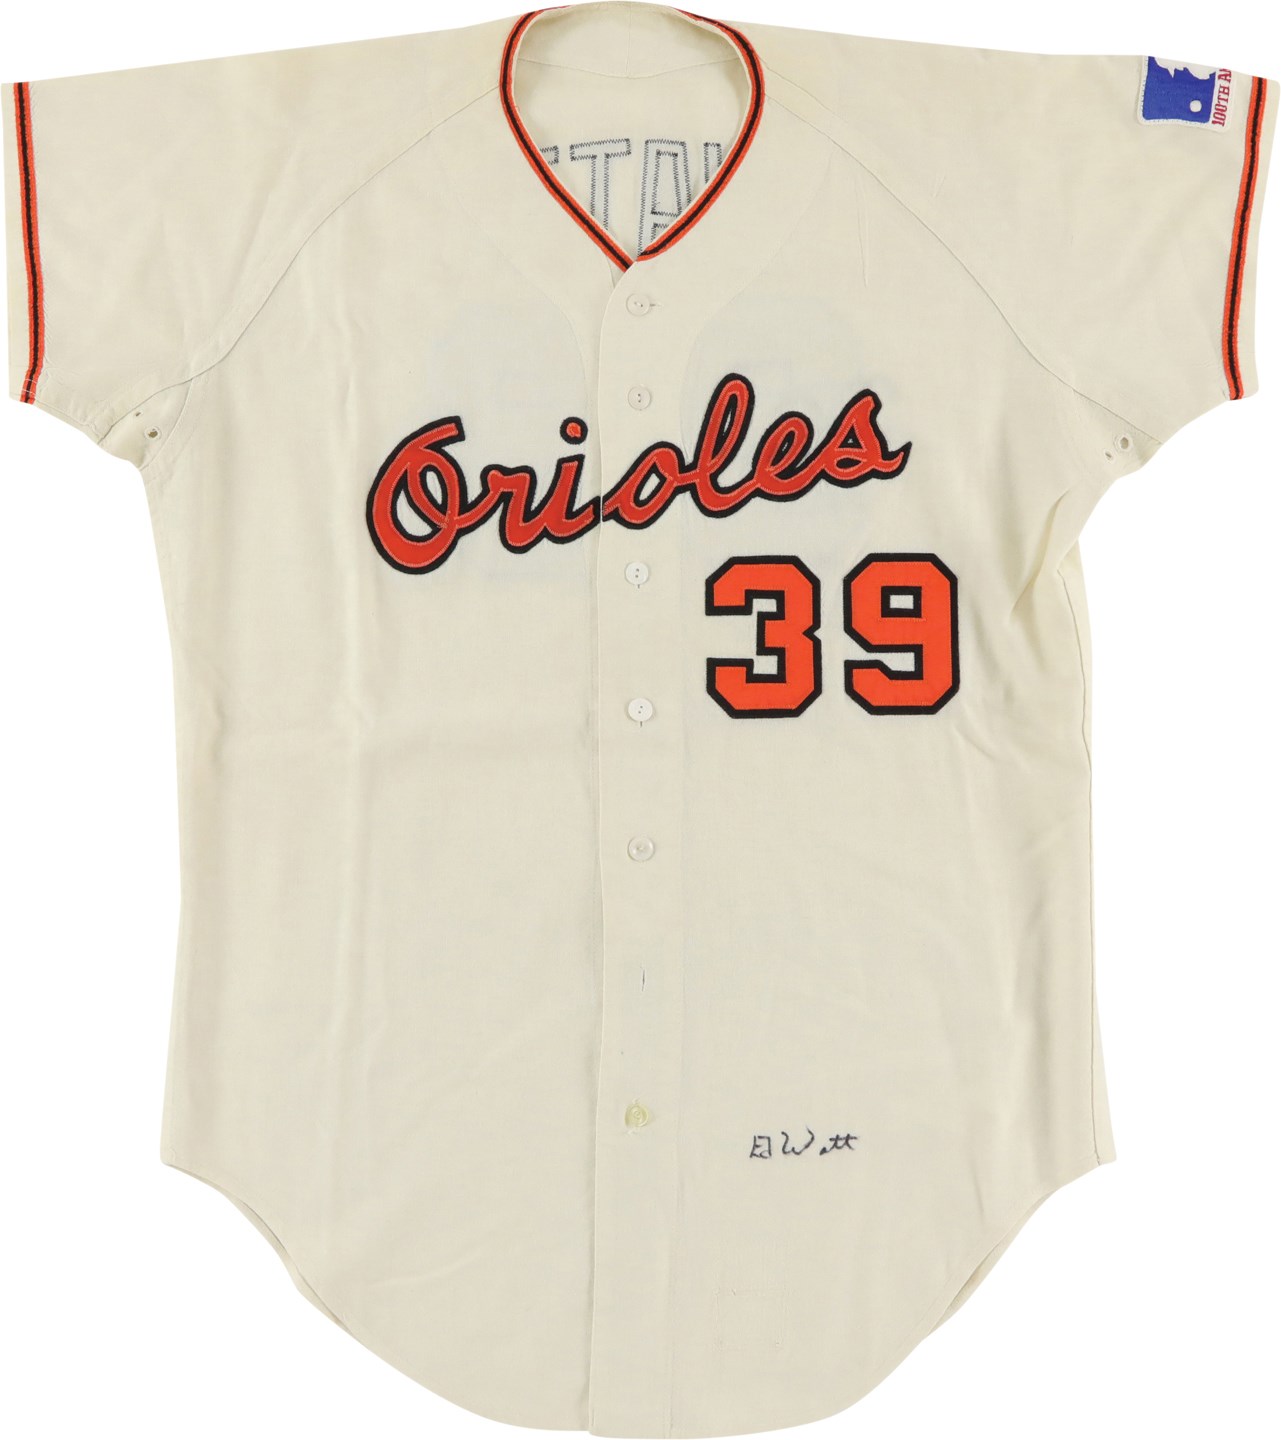 Baseball Equipment - 1969 Eddie Watt Baltimore Orioles Signed Game Worn Jersey